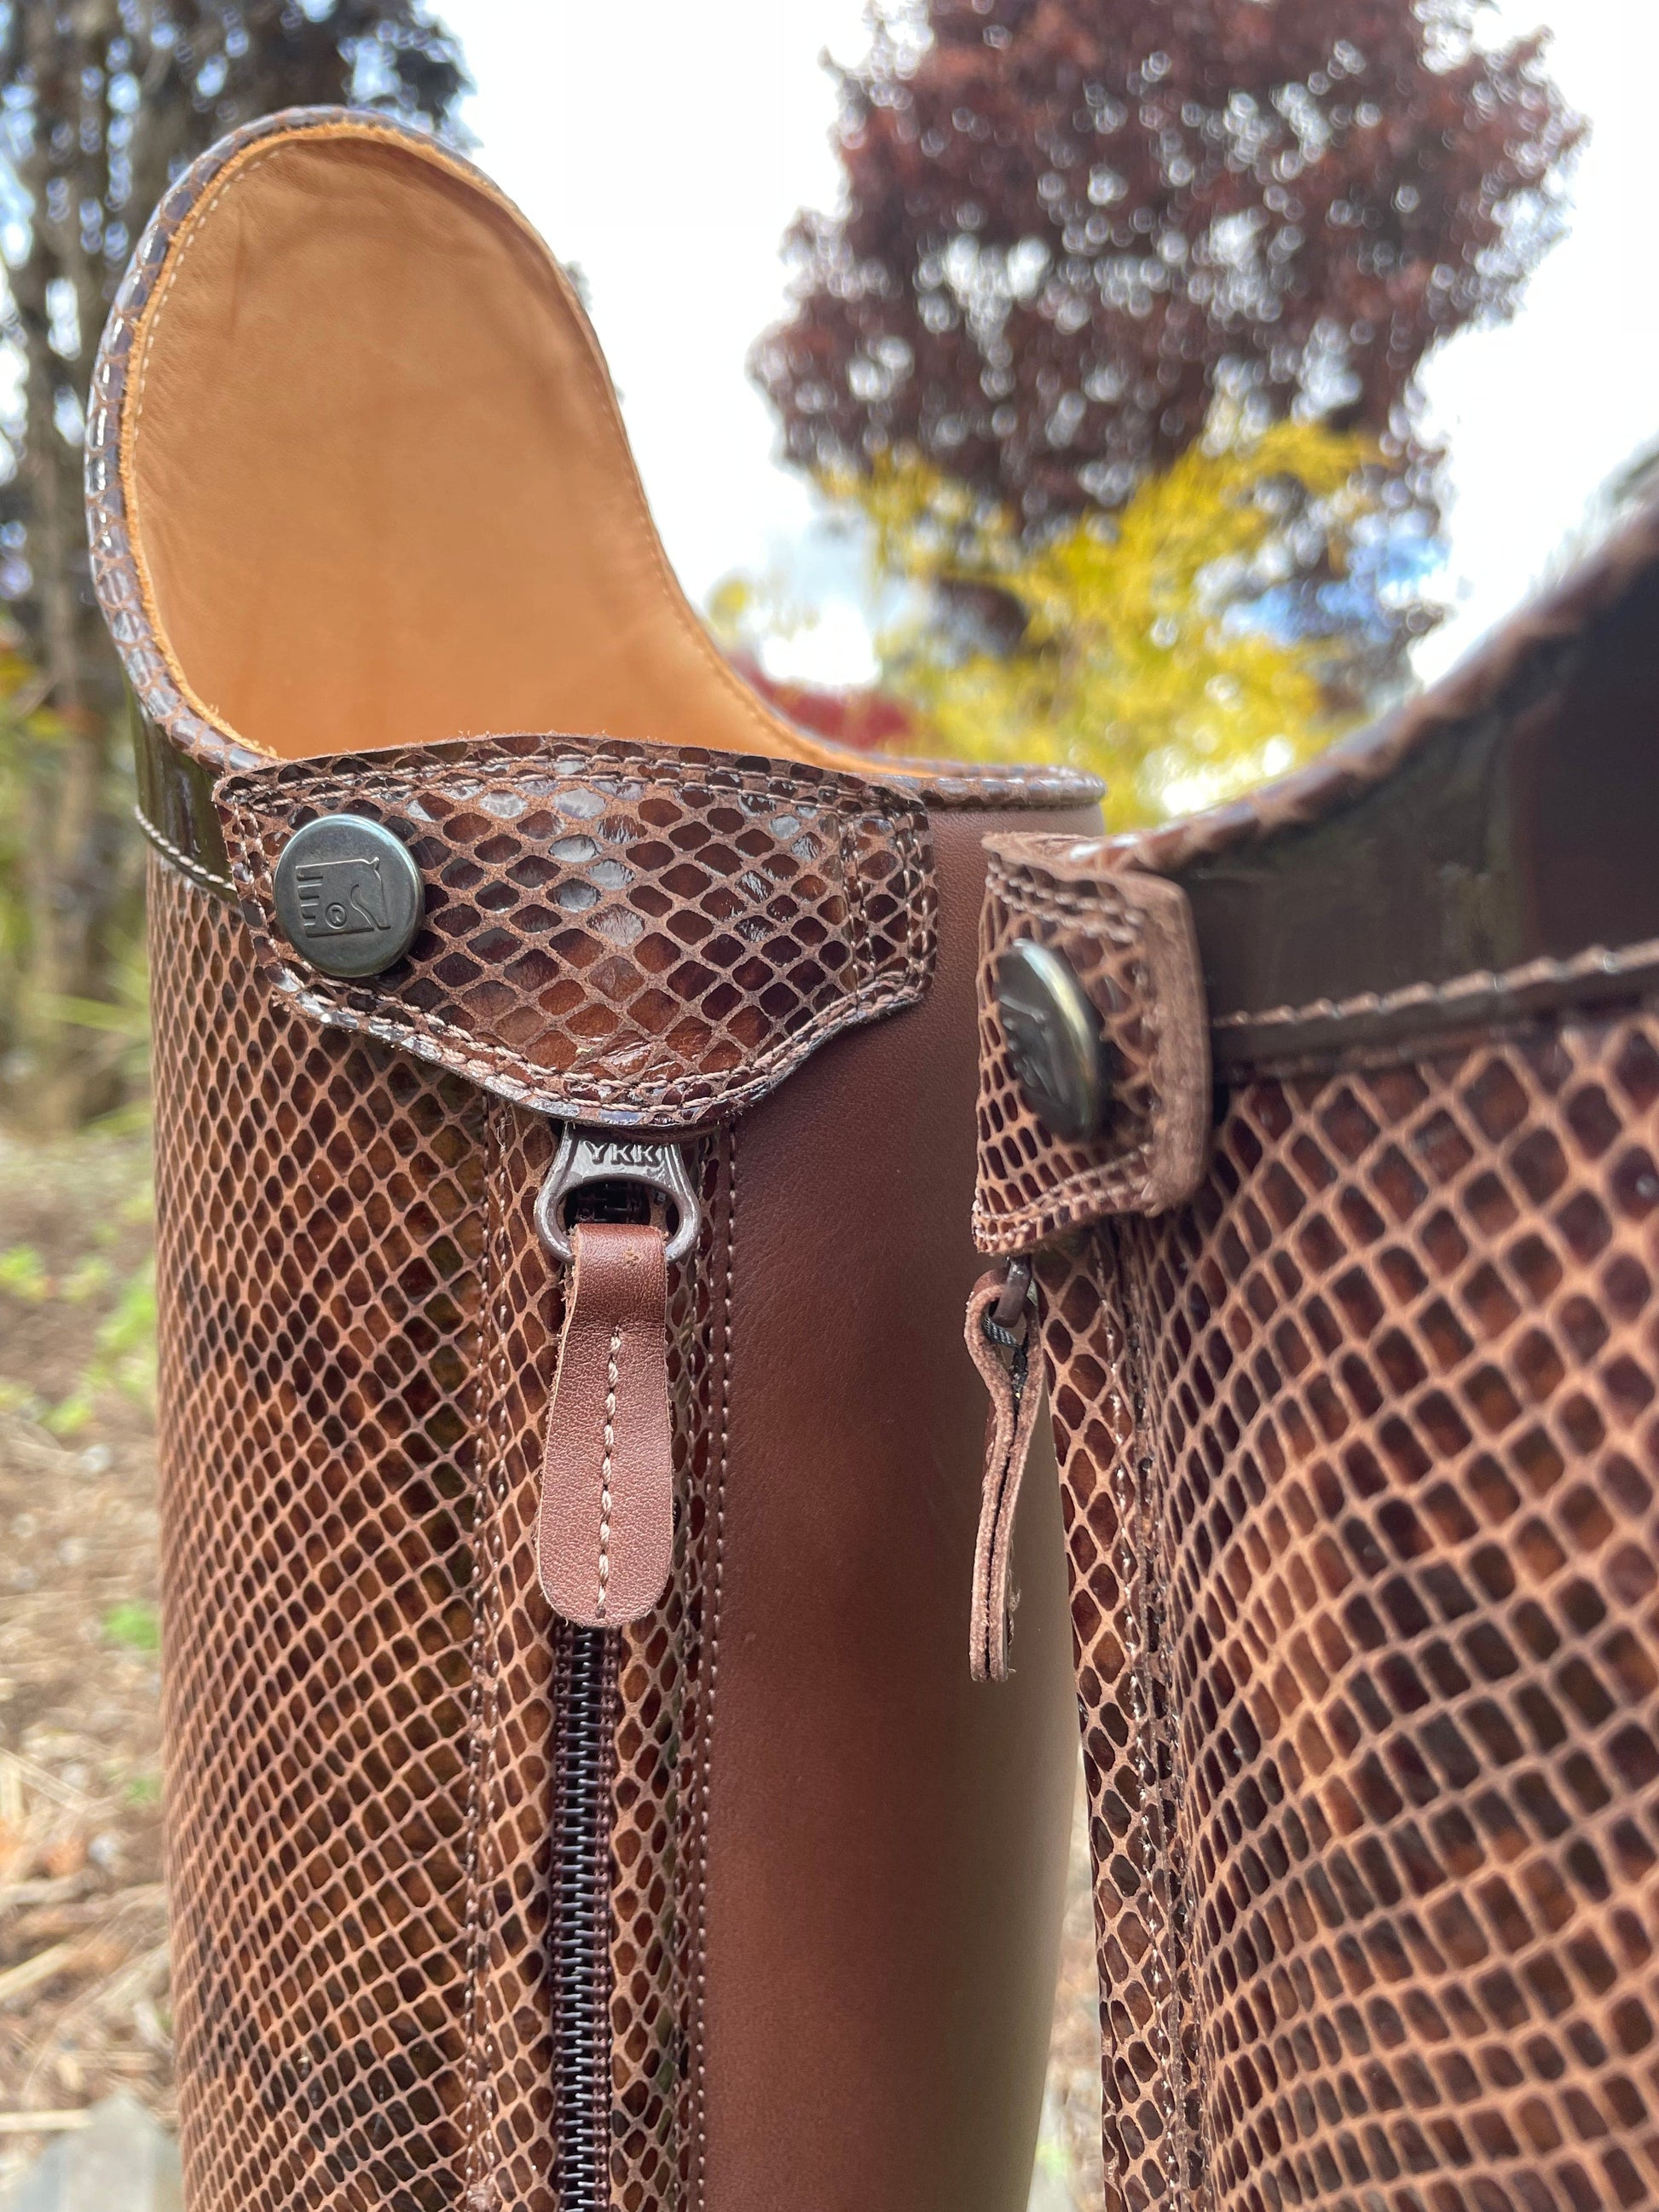 Custom DeNiro Bellini Dressage Boot - Pitone Brown with Brown Patent America Top & Swarovski Toe